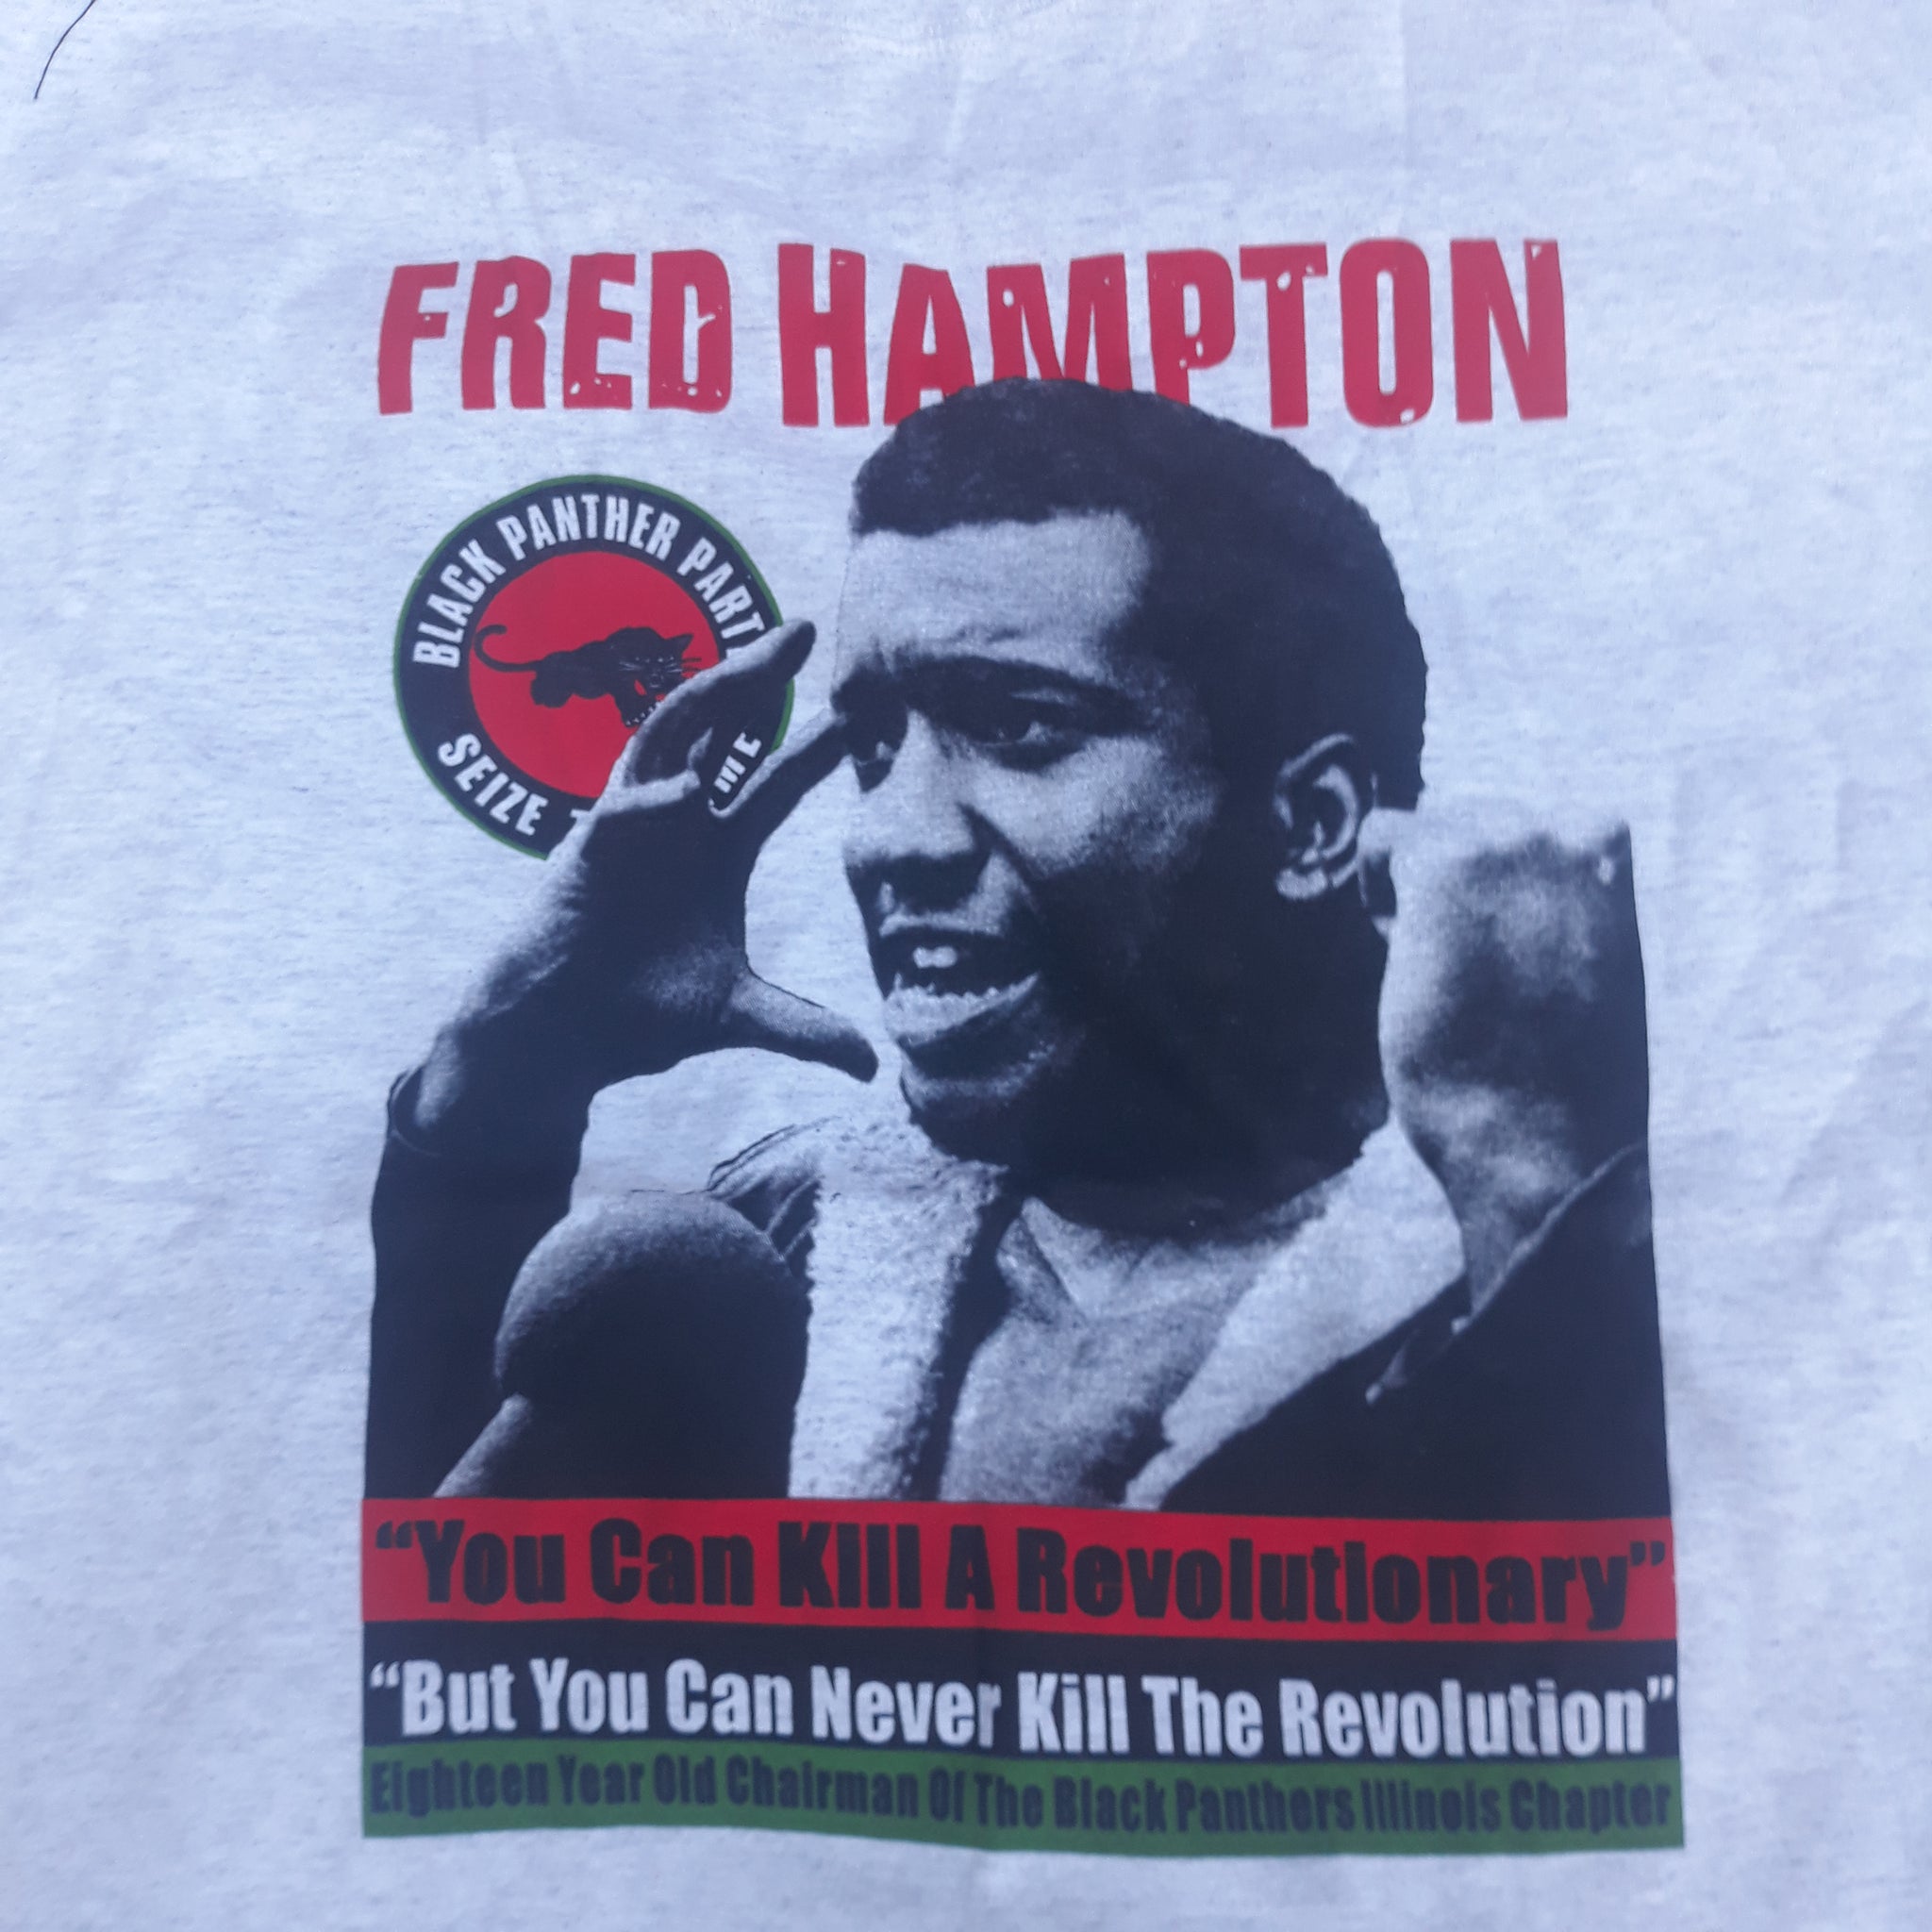 Men's Fred Hampton Tee Shirt -RBG